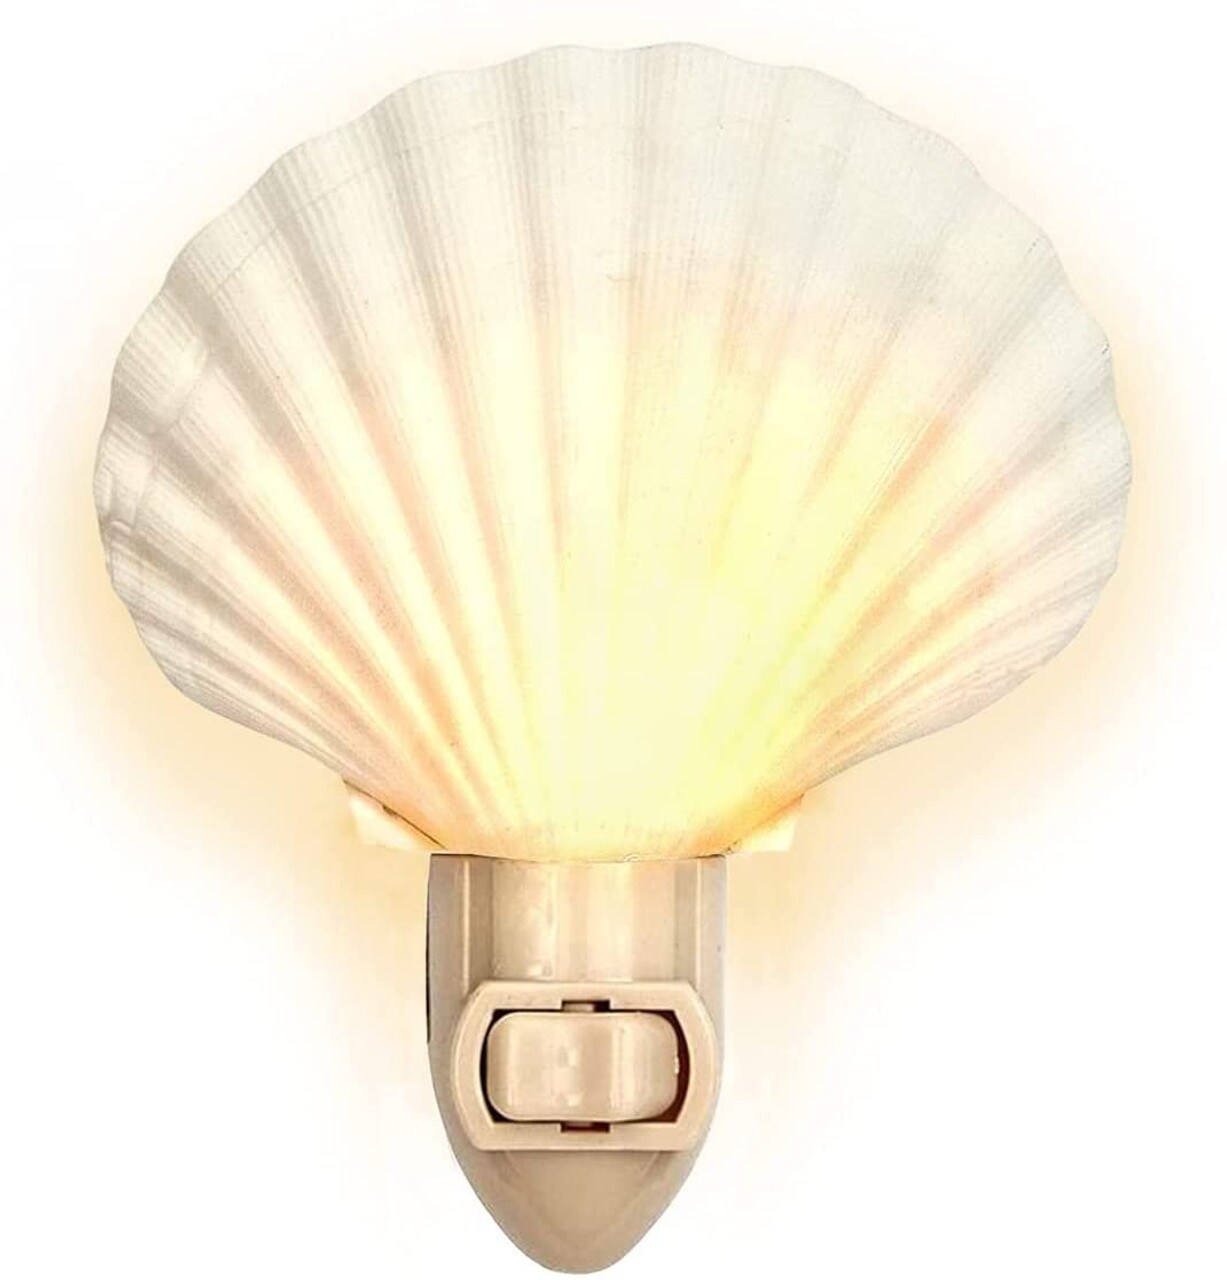 Seashell Night Light 1 piece White Clam Seashell Plug in Night Light